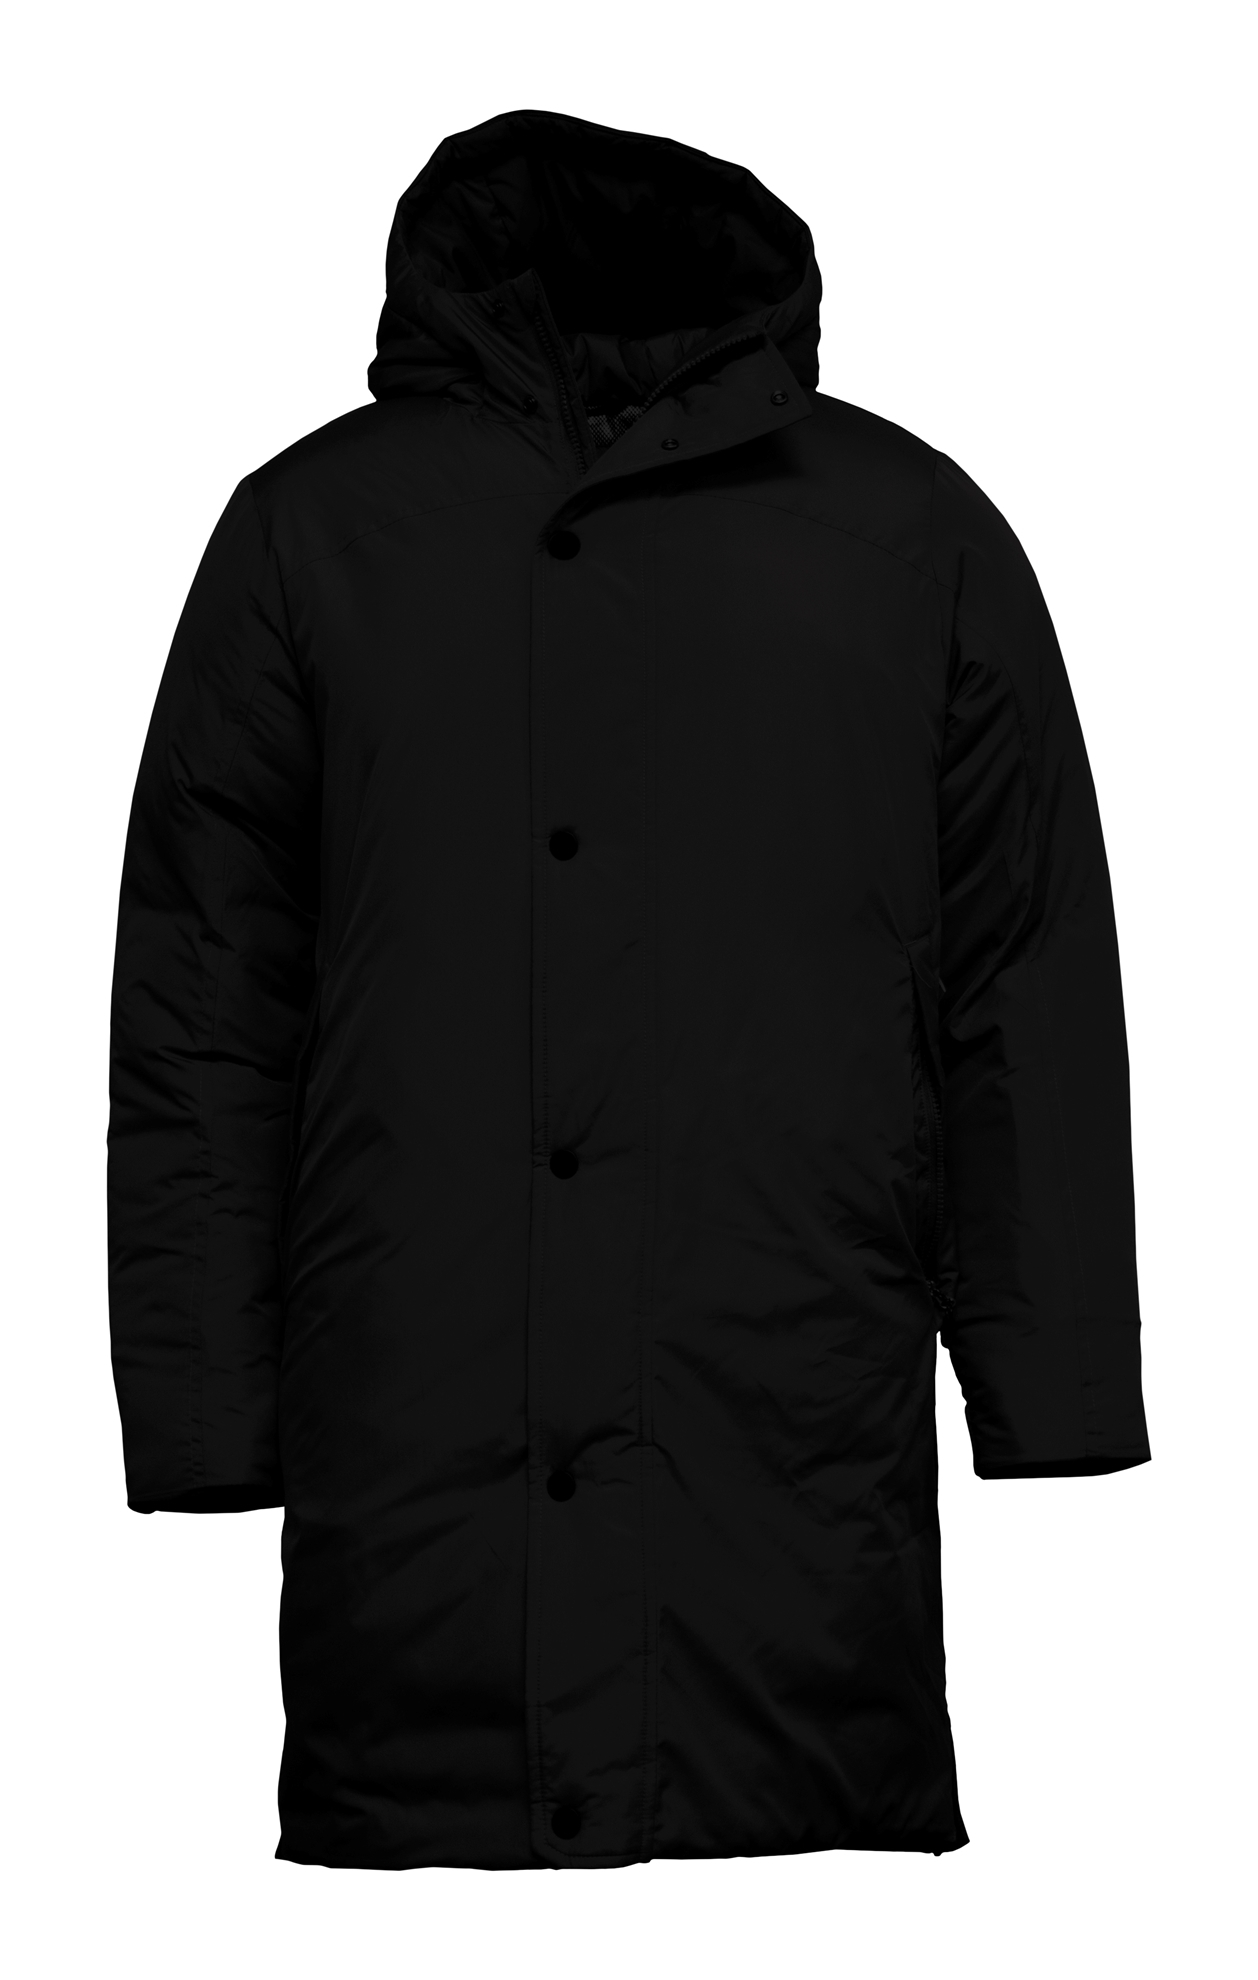 BAW Athletic Wear B8000 - Adult Bench Jacket